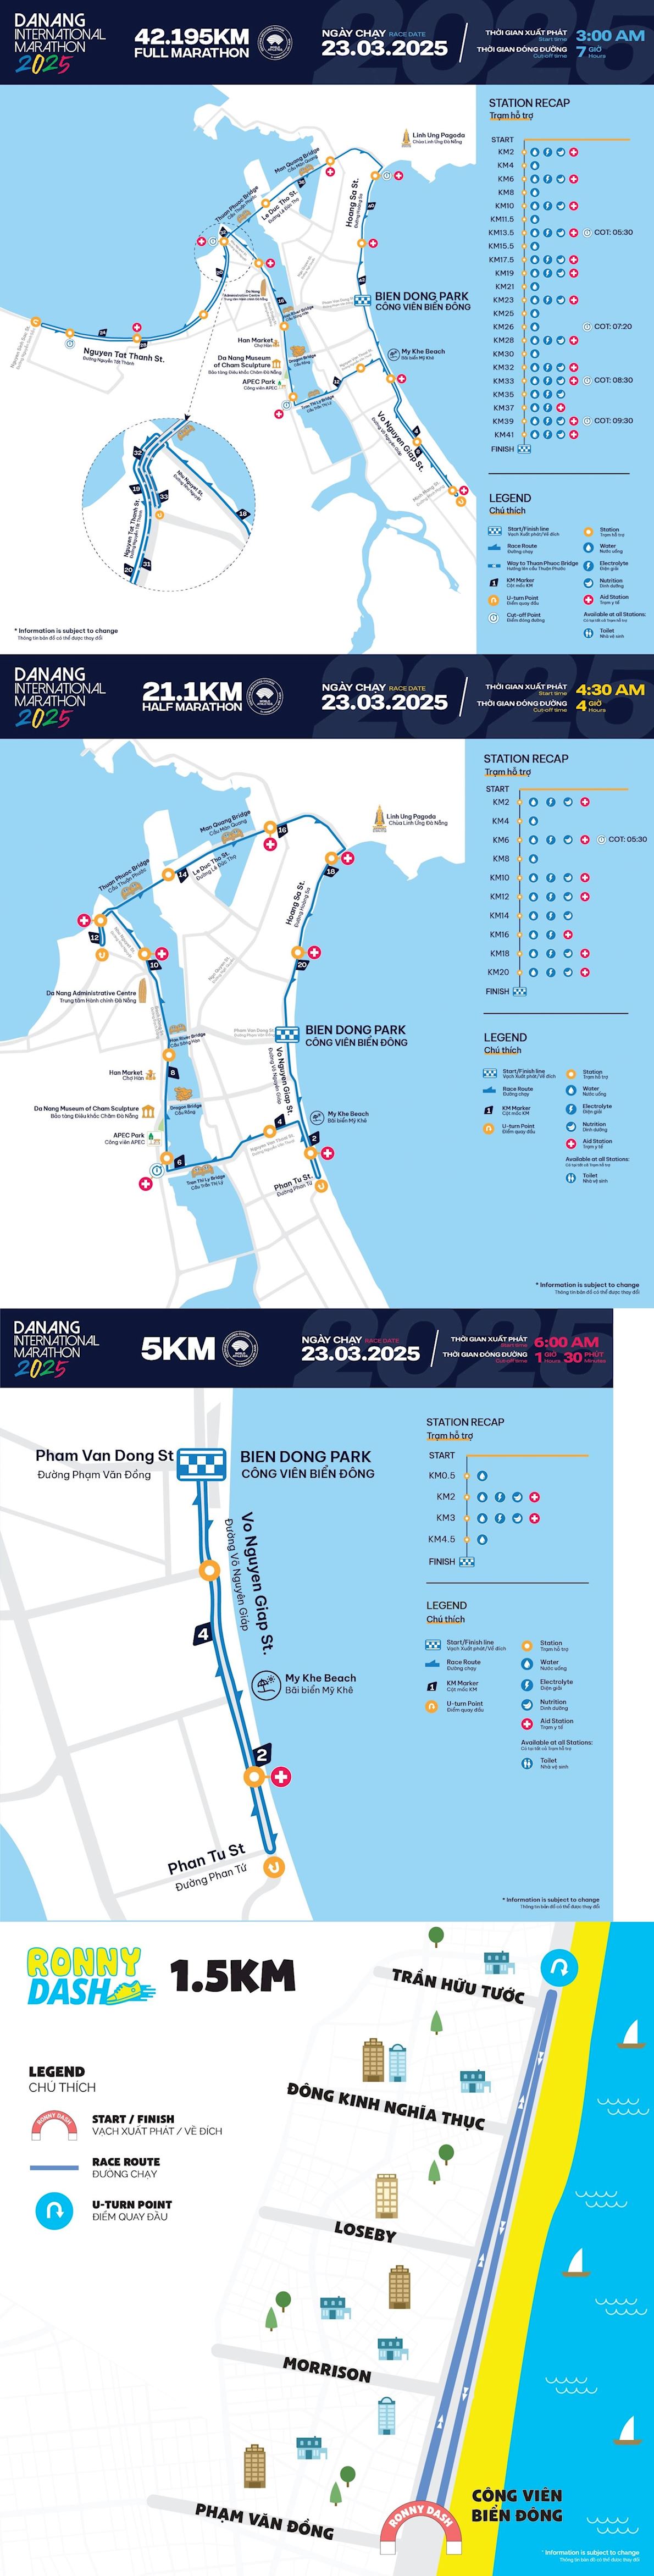 Danang International Marathon MAPA DEL RECORRIDO DE